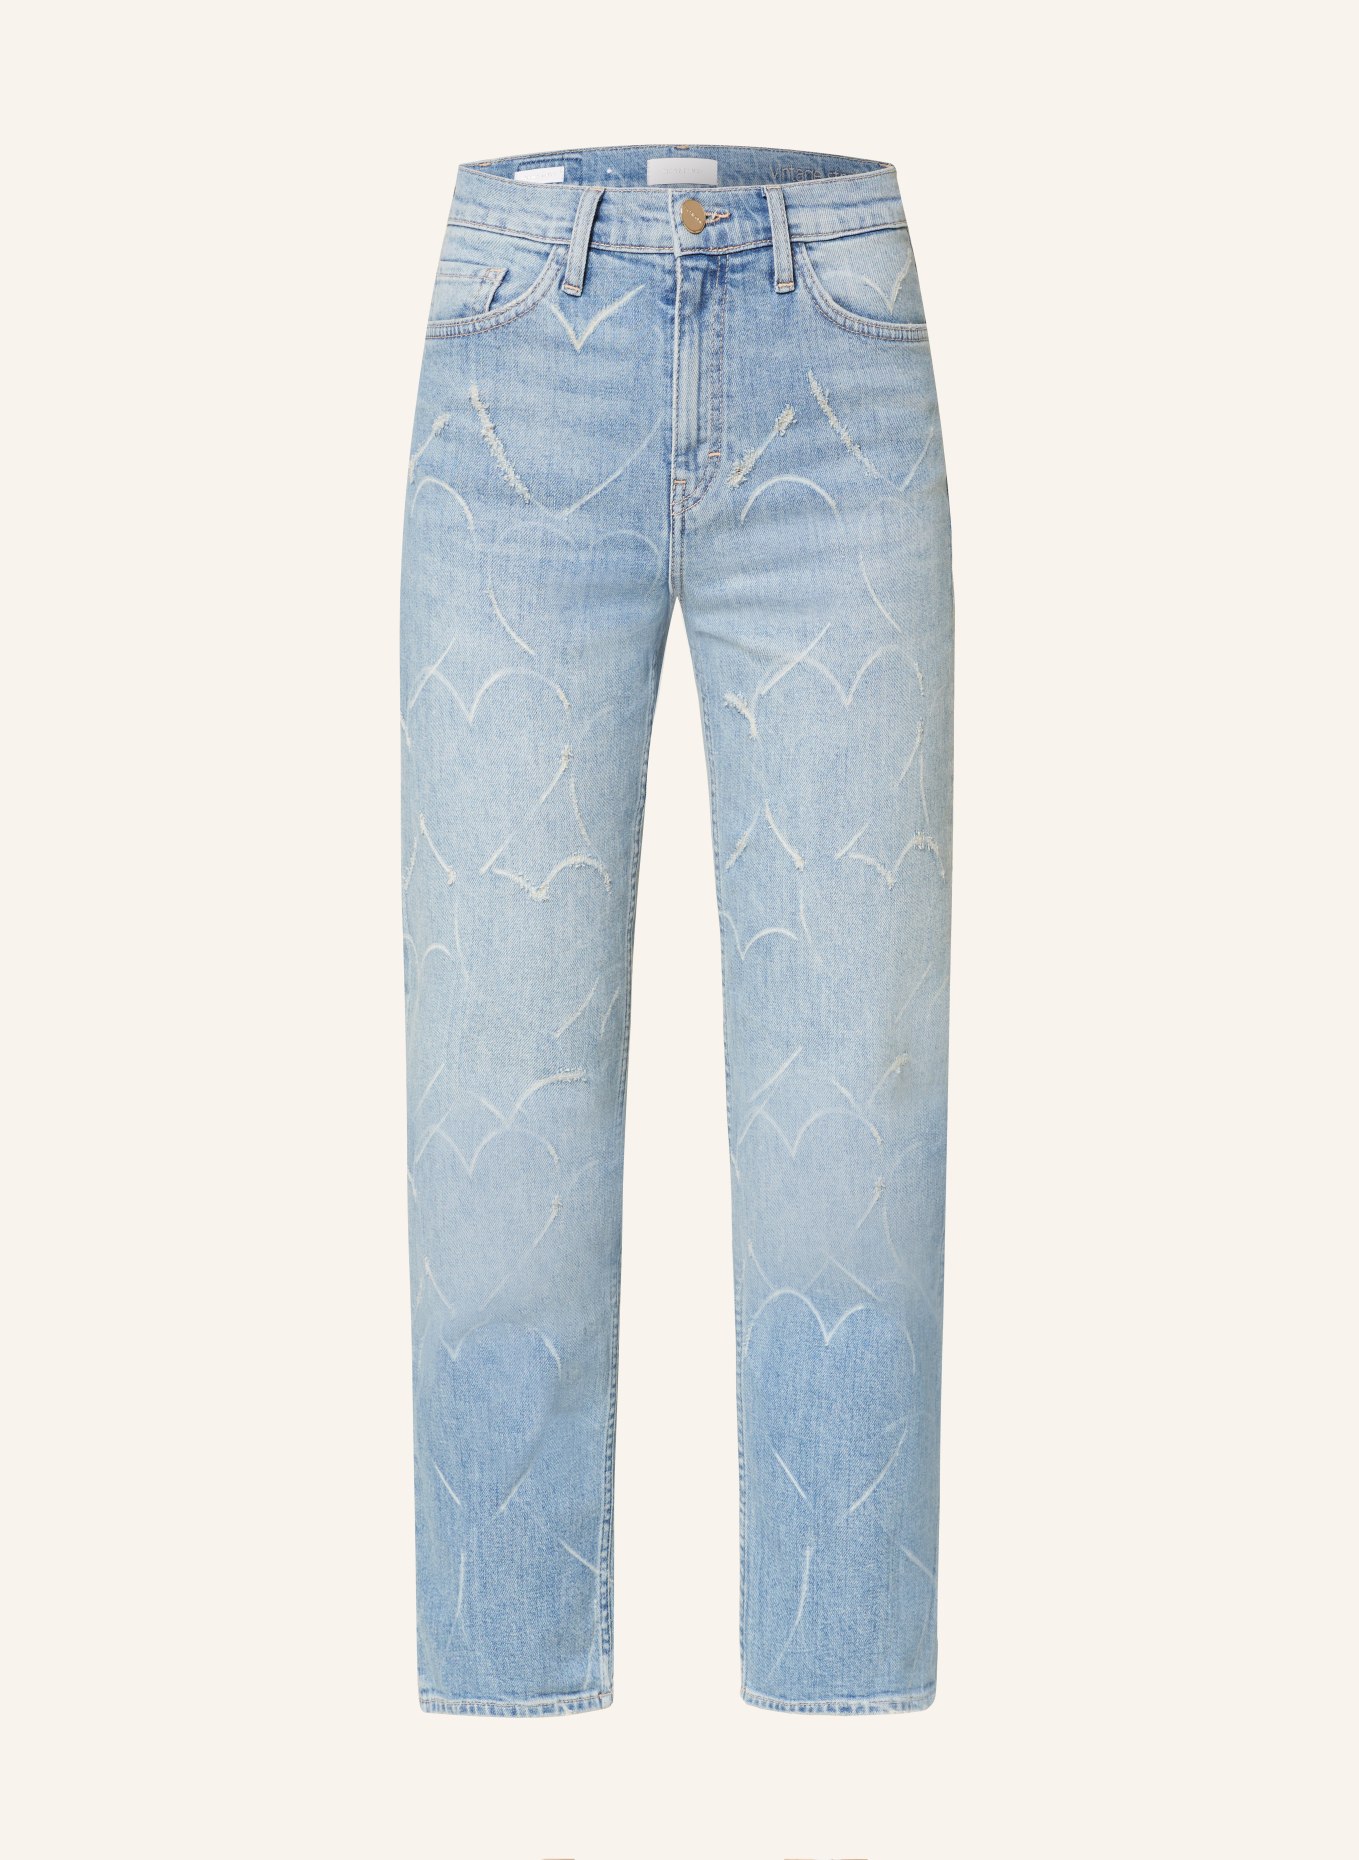 denim 7/8-Jeans rich&royal in blue 700